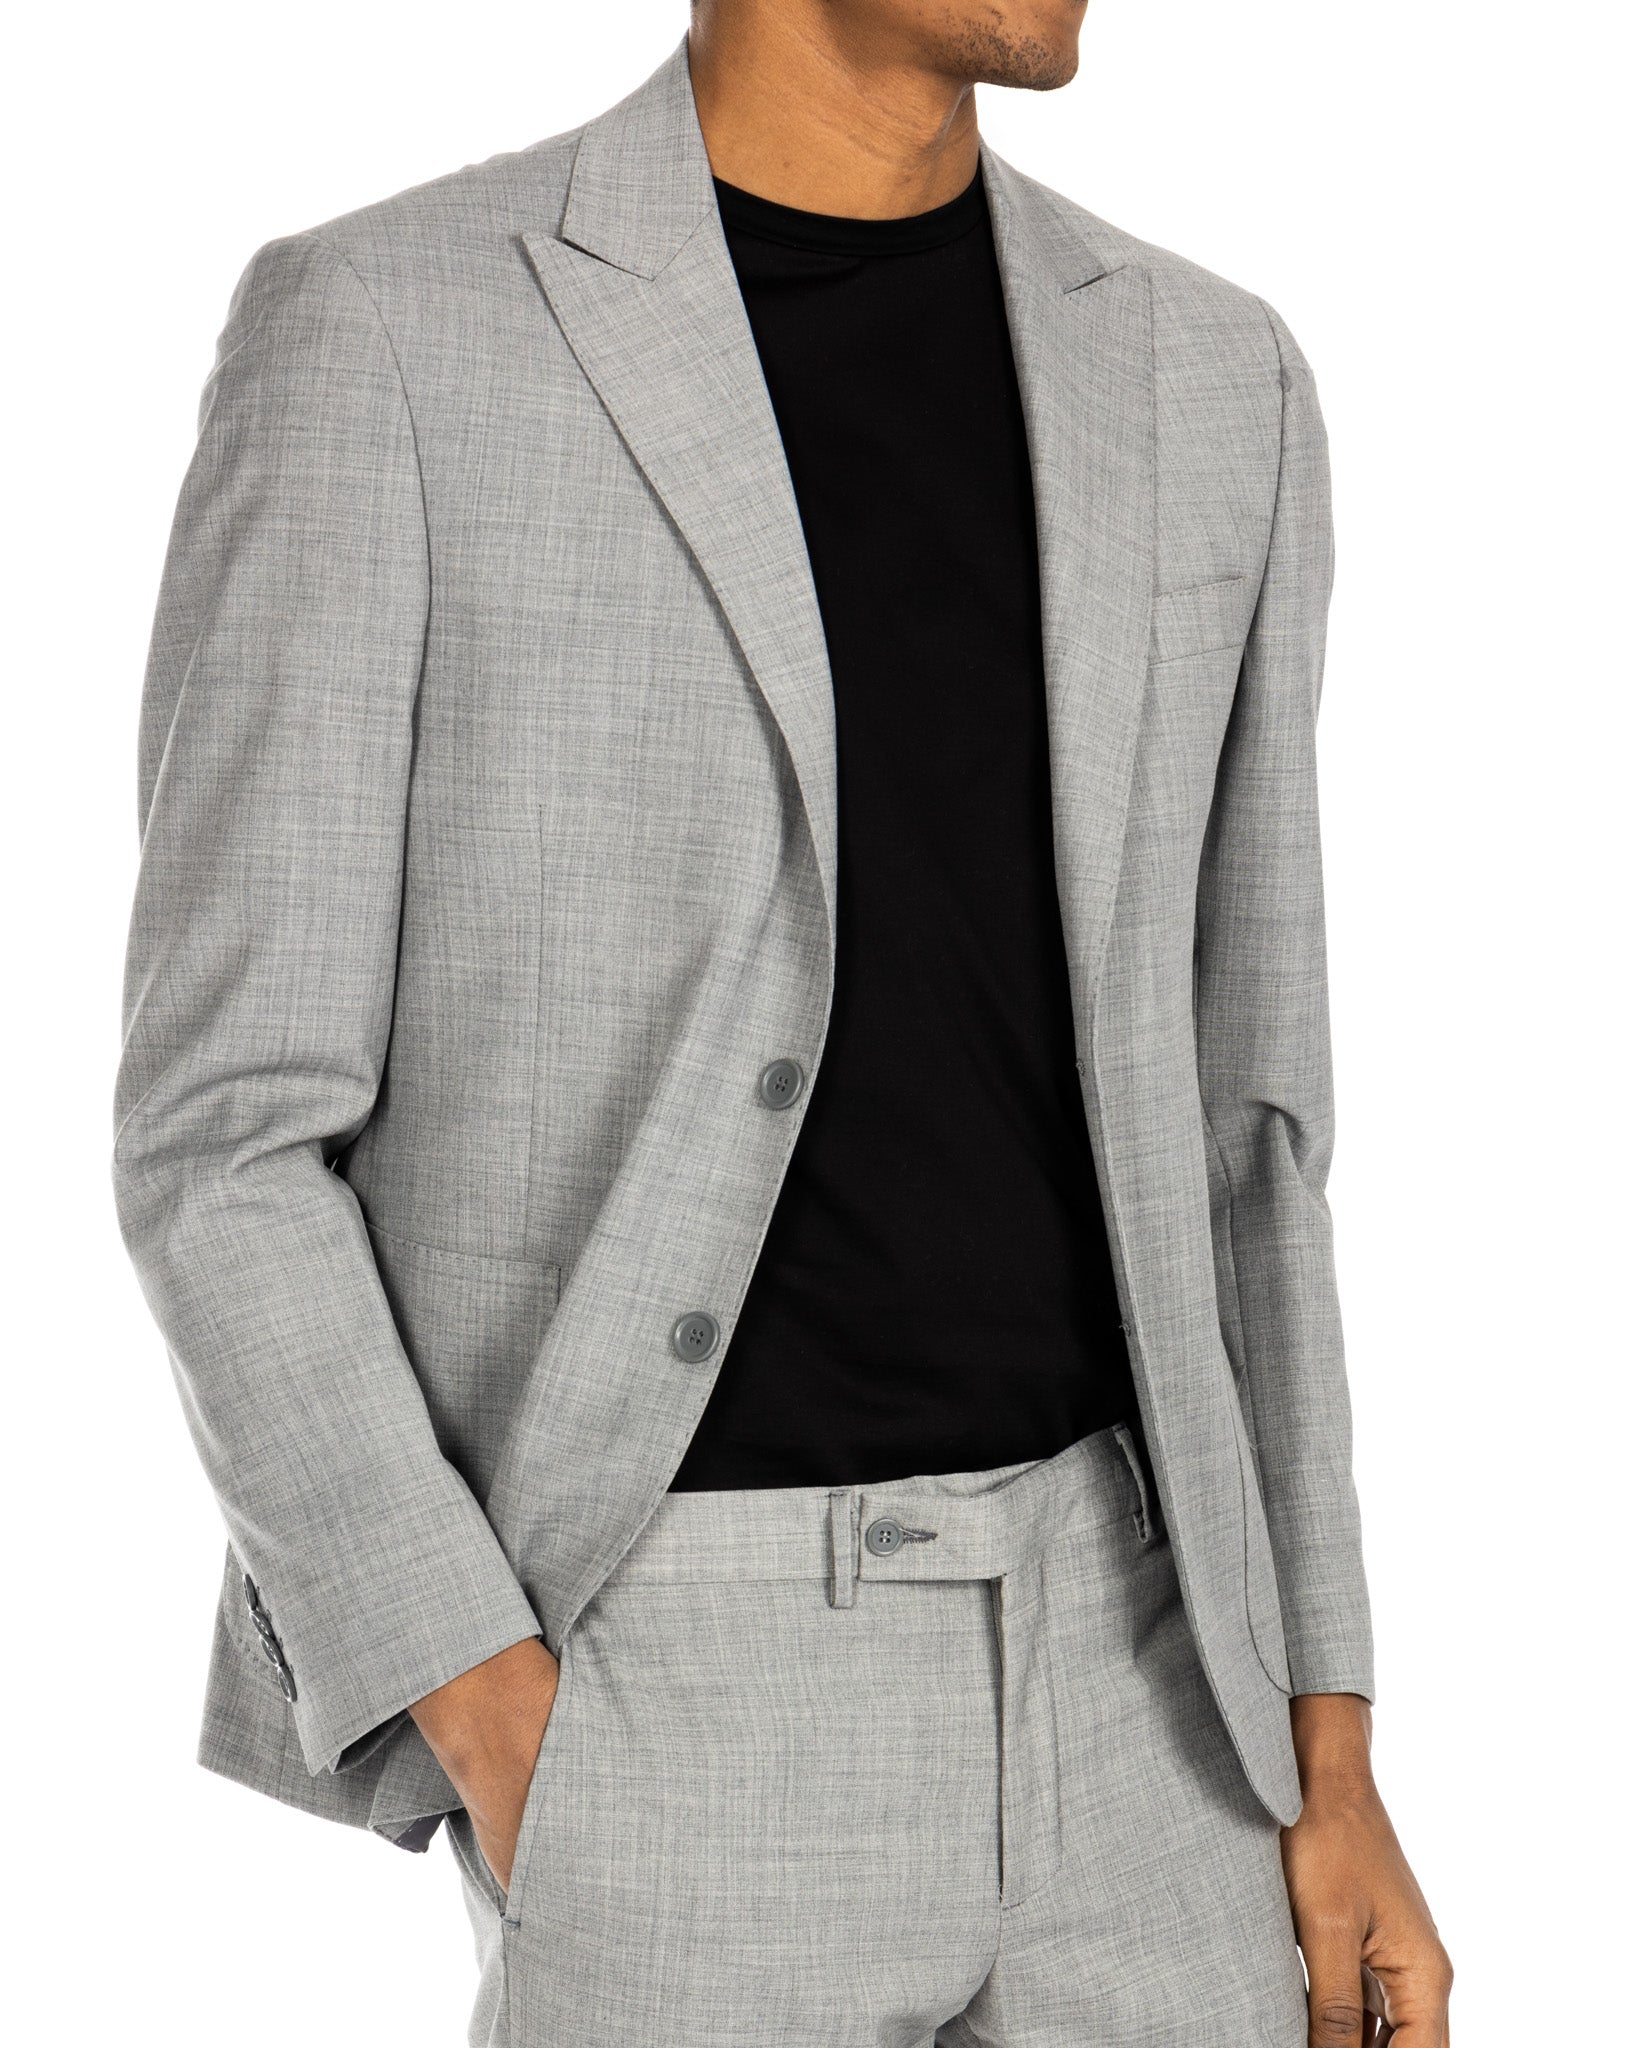 Naples - gray wool blend suit